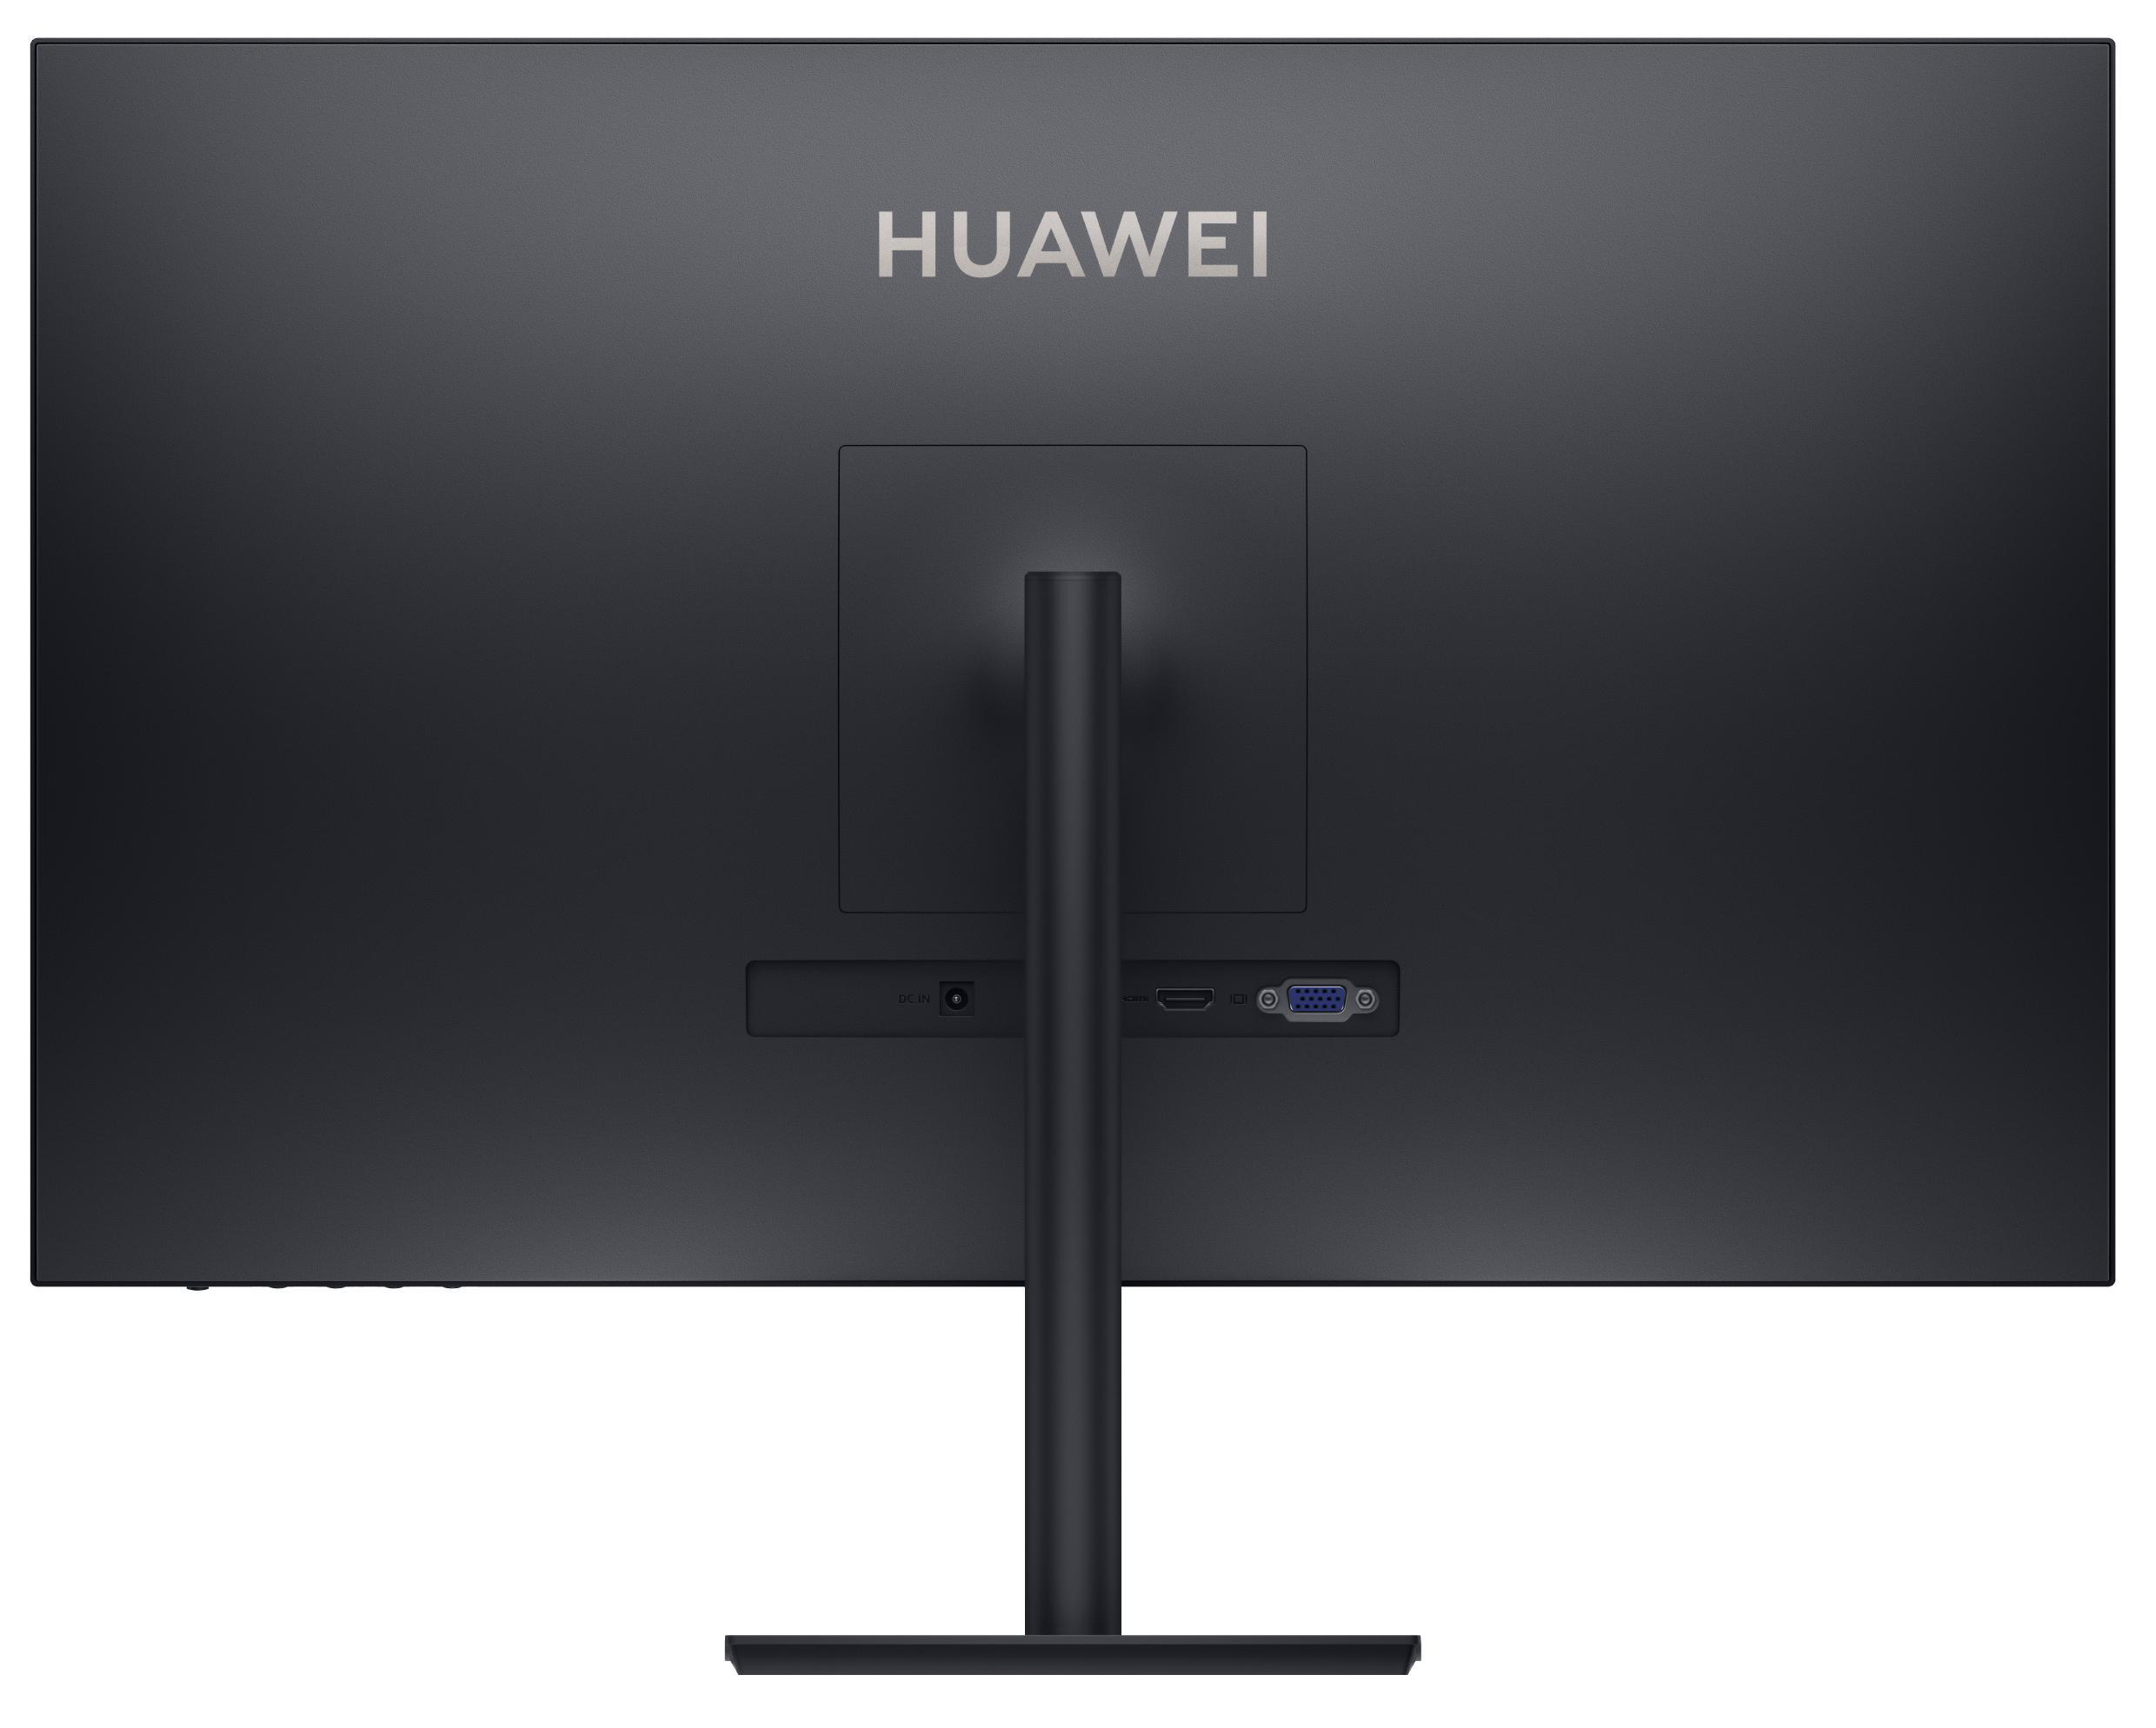 HUAWEI Display AD80HW 23,8 Monitor (5 Zoll Reaktionszeit, Hz) Full-HD 60 ms